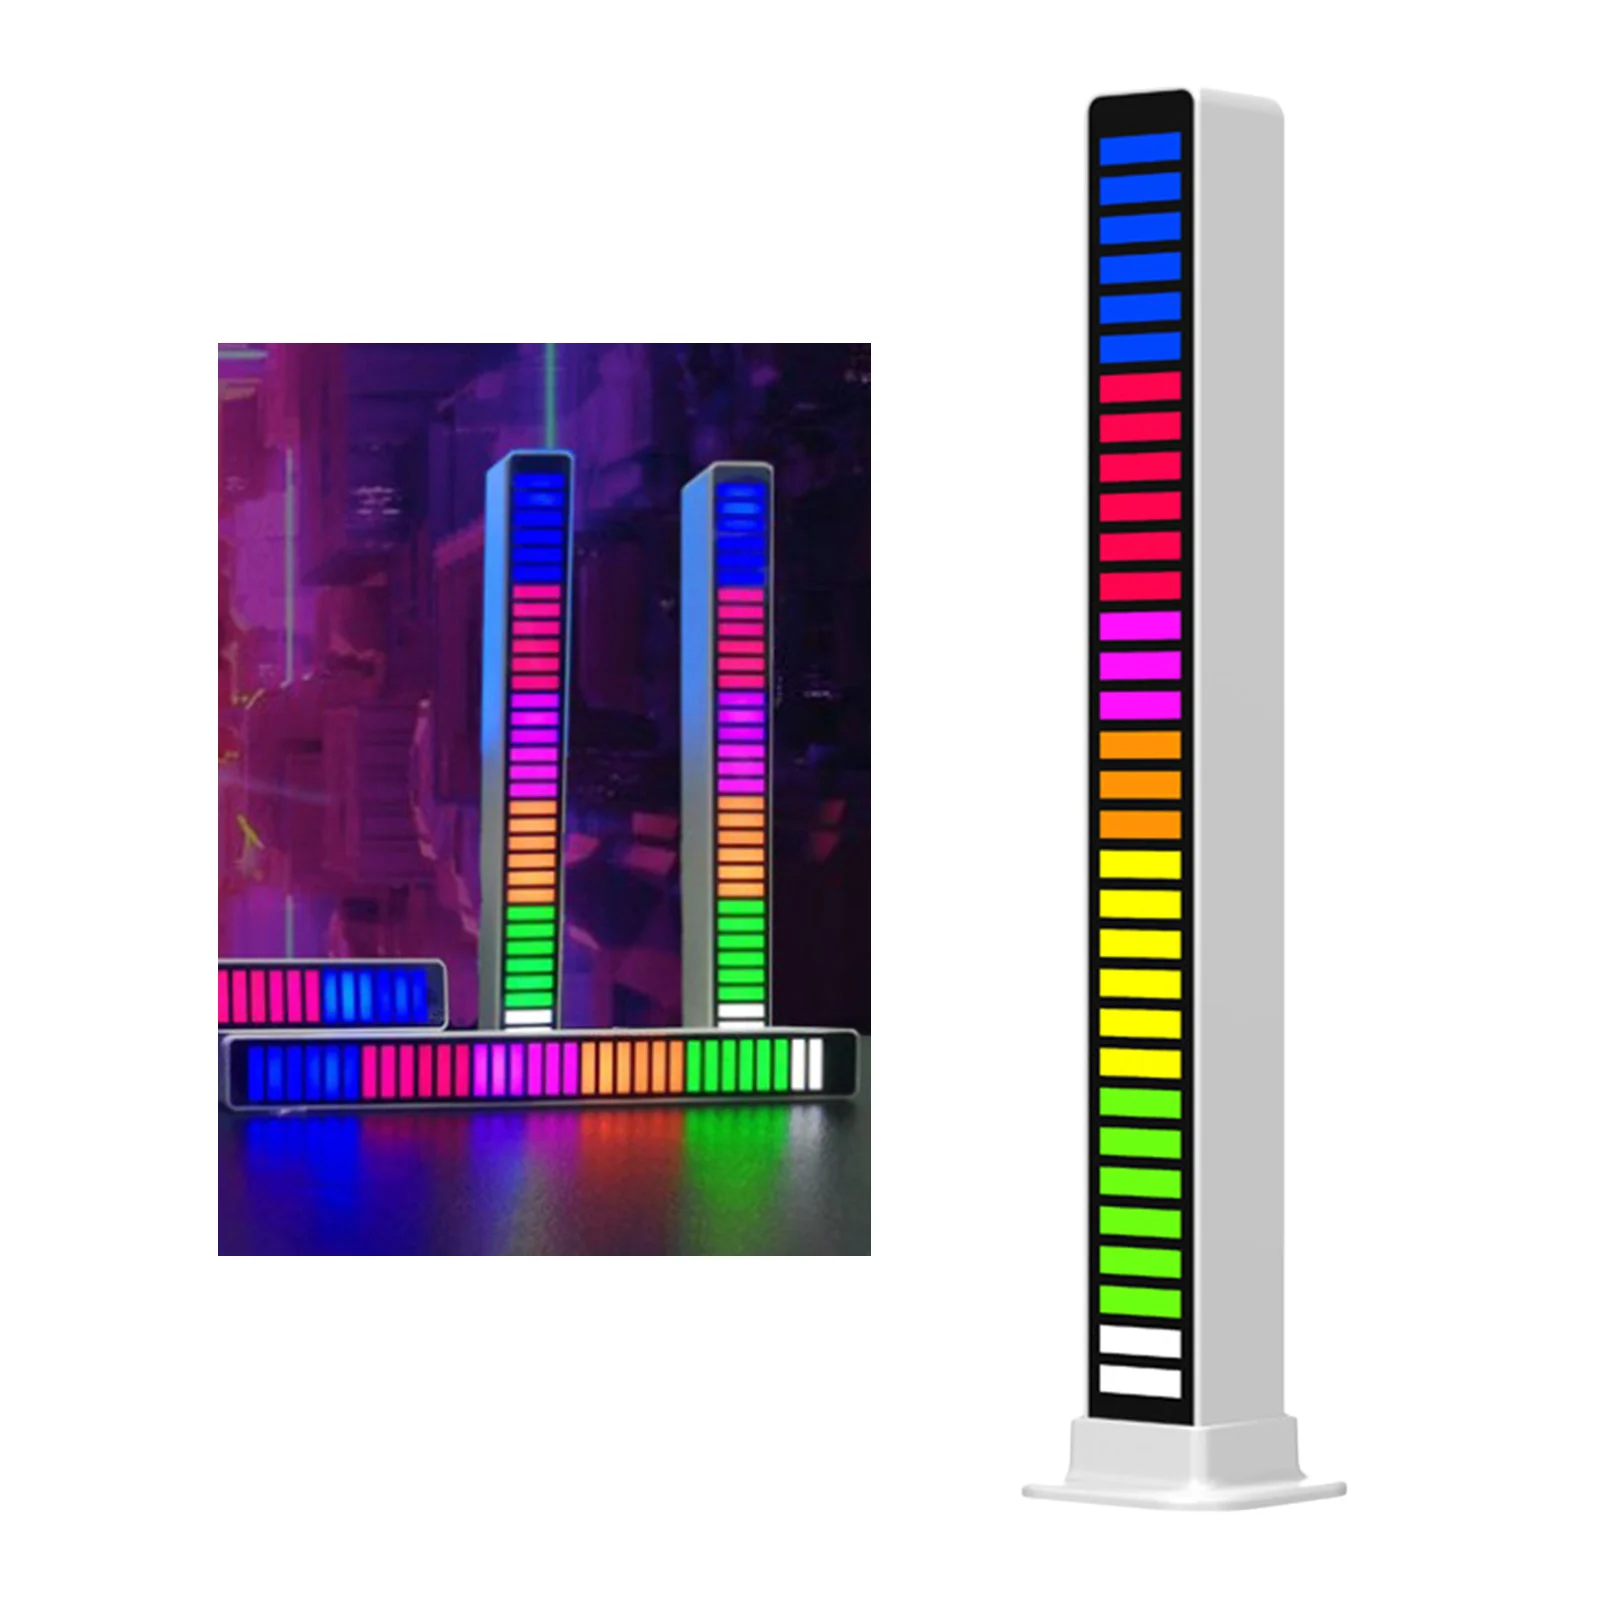 Creative RGB Music Sound Control LED Level Light Bar Novelty Rhythm Lamp Desktop Setup Backlight Car Vehicle Atmosphere Light